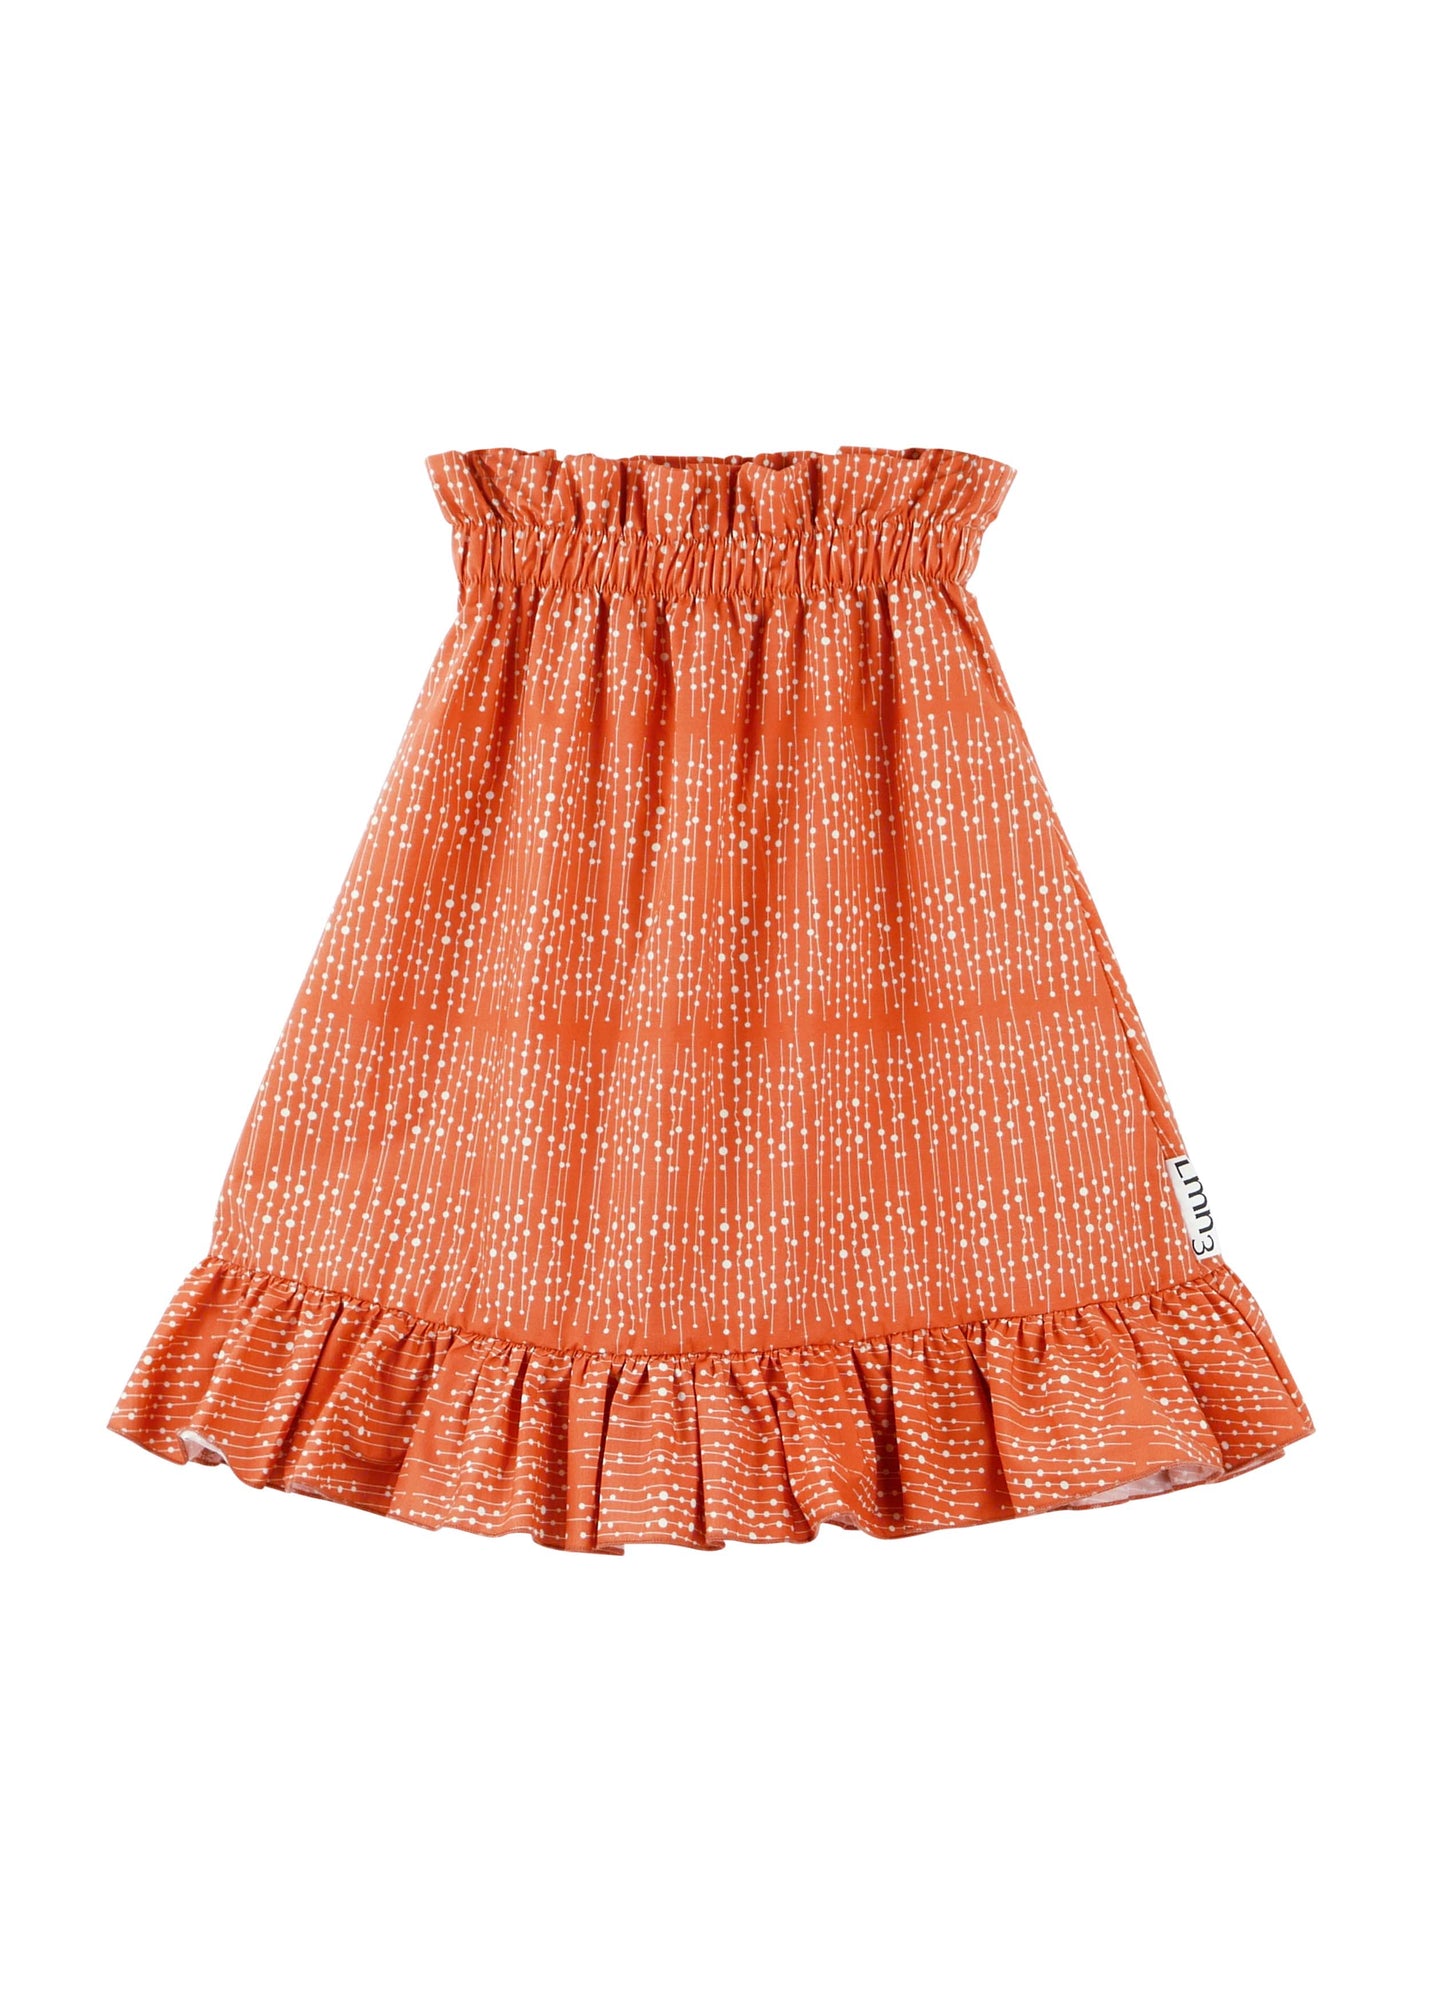 Skirt Nr. 16 - Marbles-Dark Orange